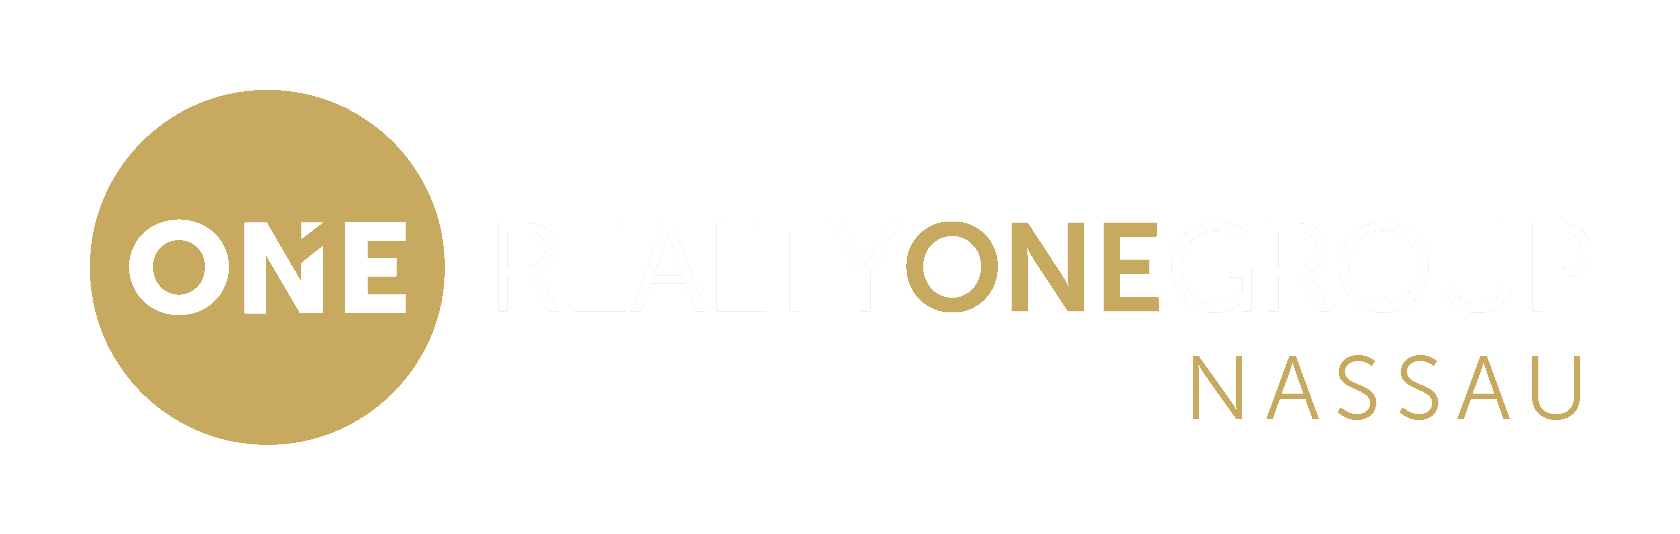 Realty One Group Nassau logo